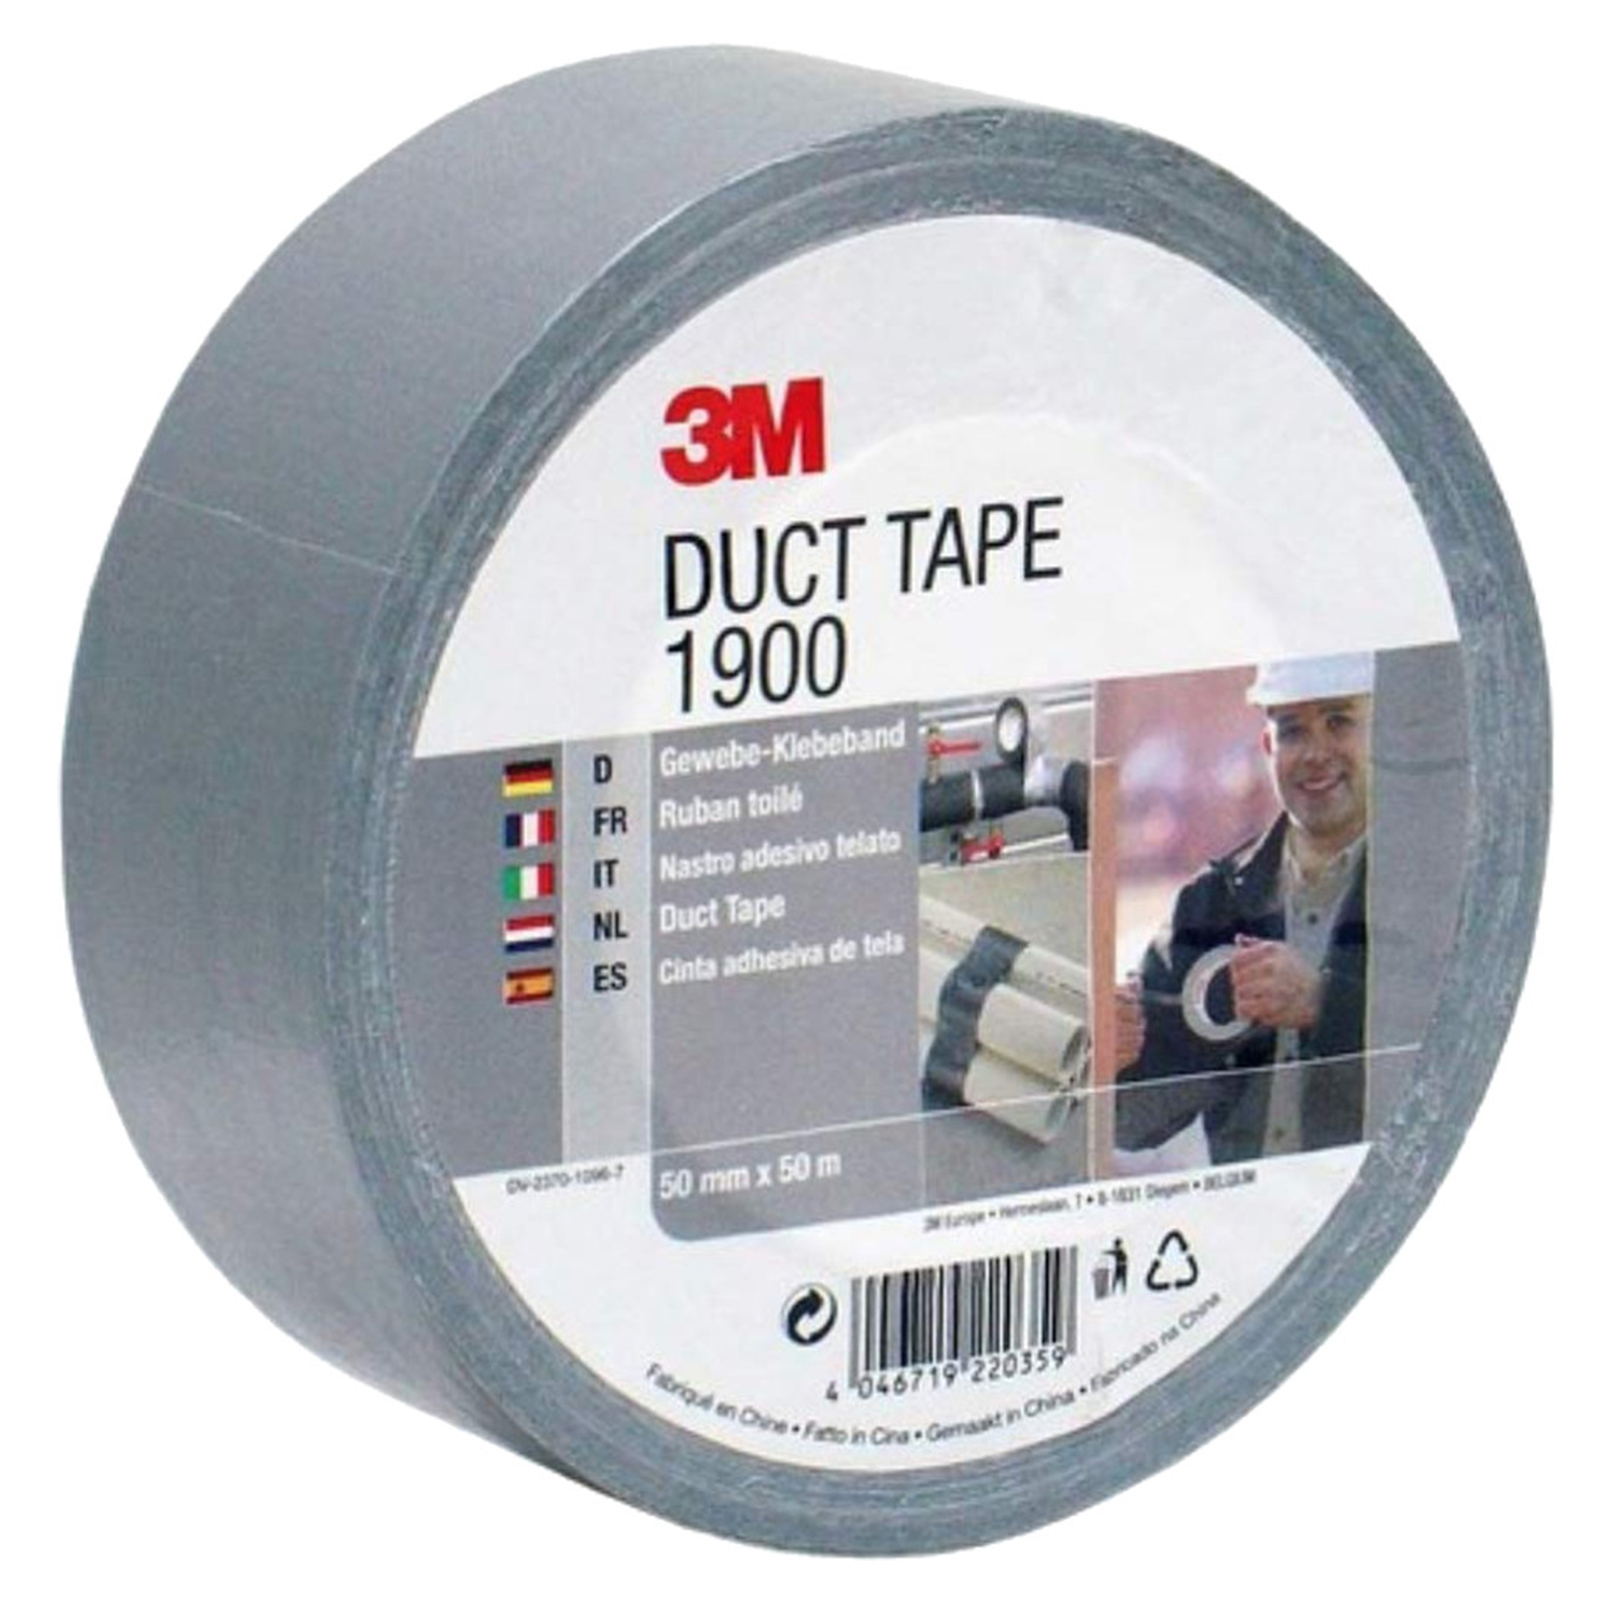 3M Economy duct tape 1900 Silver, 50 m x 50 mm armor tape repair tape.